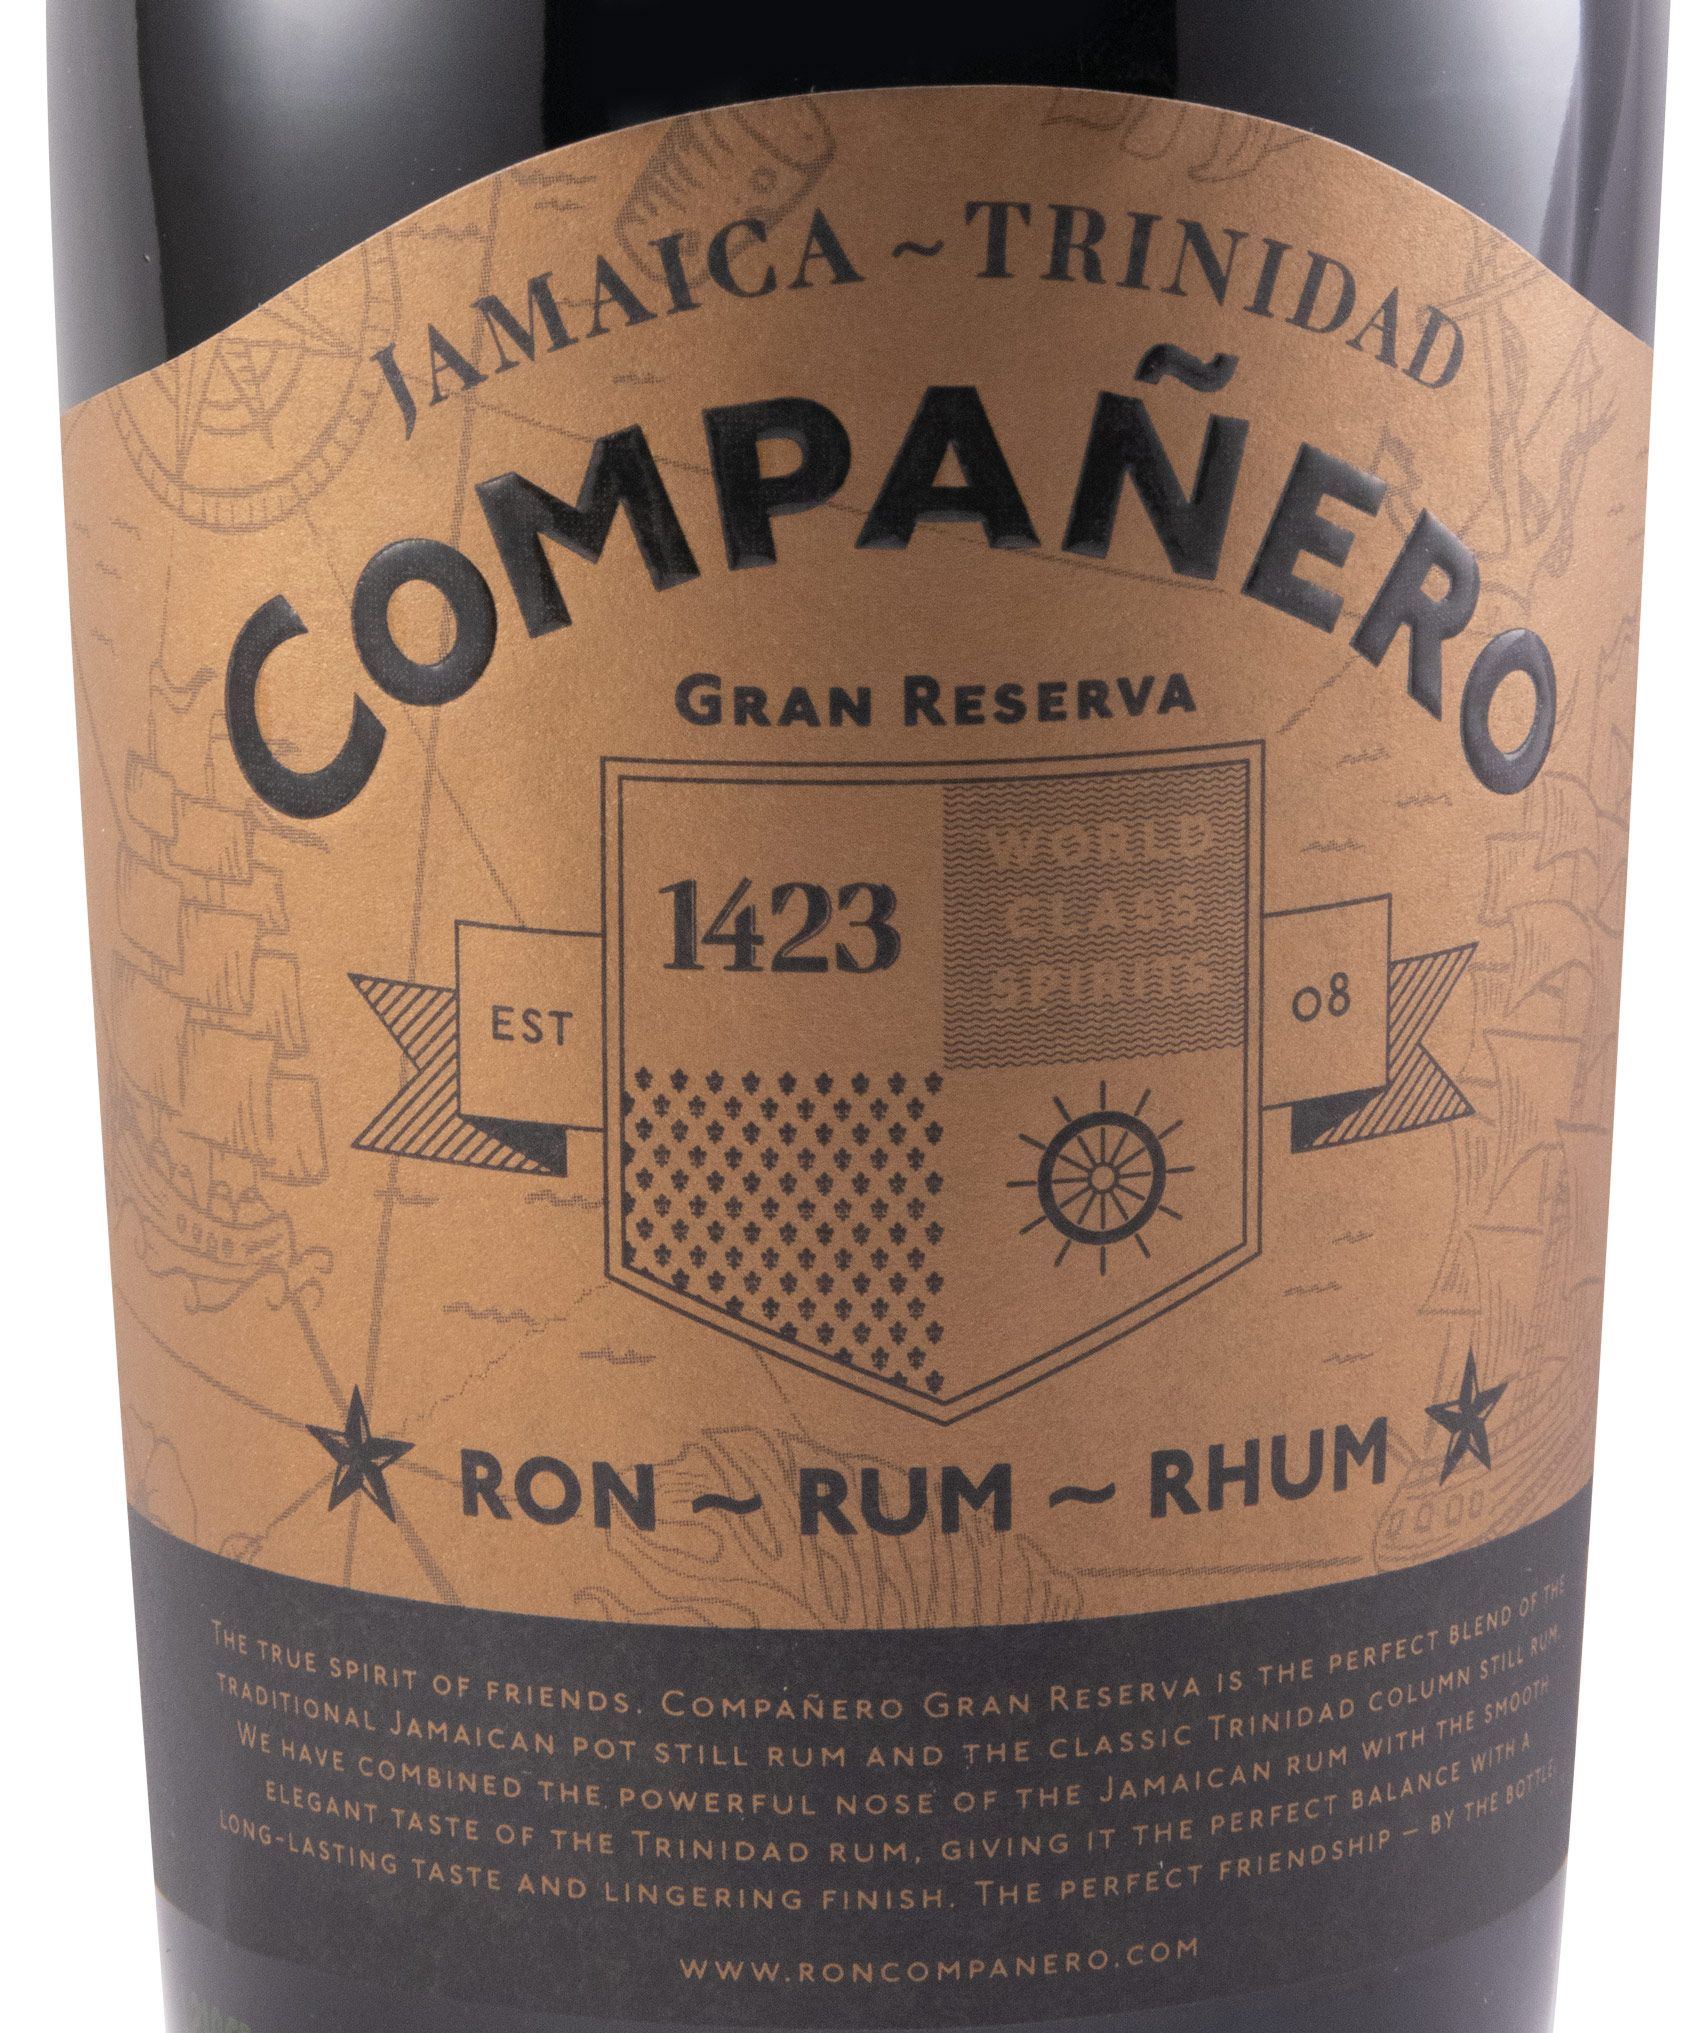 Rum Compañero Jamaica Trinidad Gran Reserva